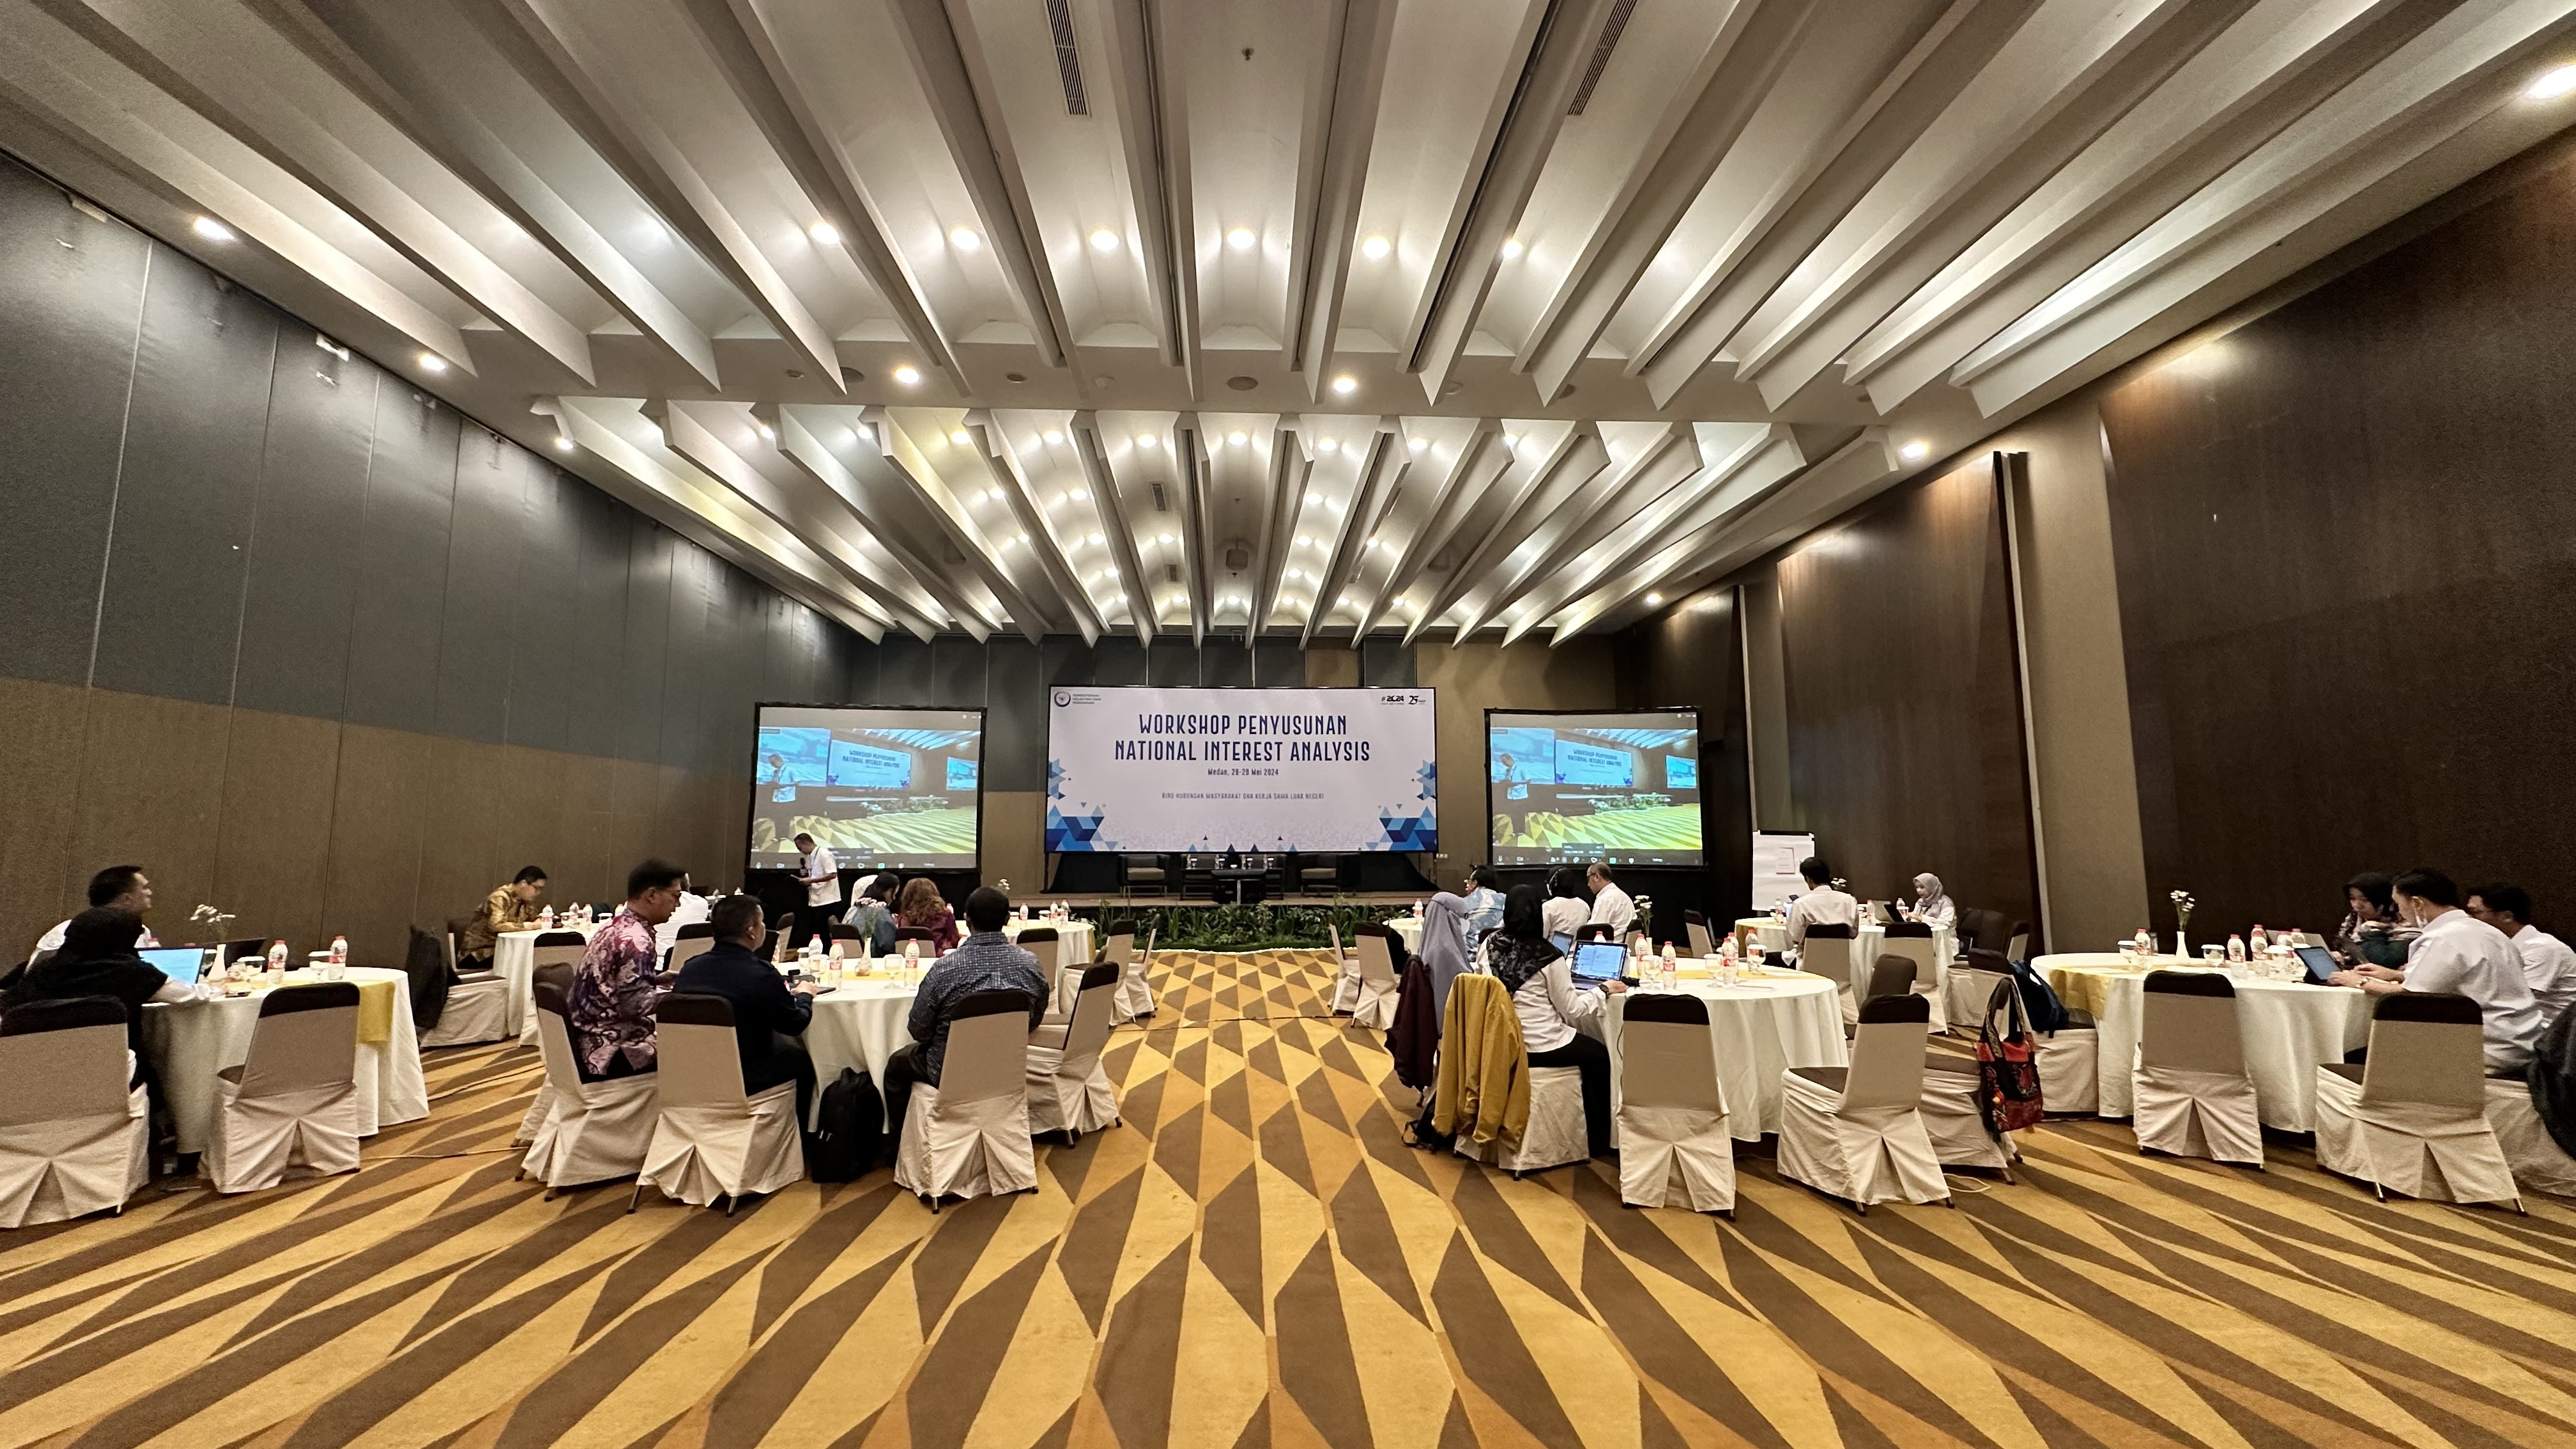 Pelaksanaan Workshop Penyusunan National Interest Analysis (NIA), Medan, 28 – 29 Mei 2024